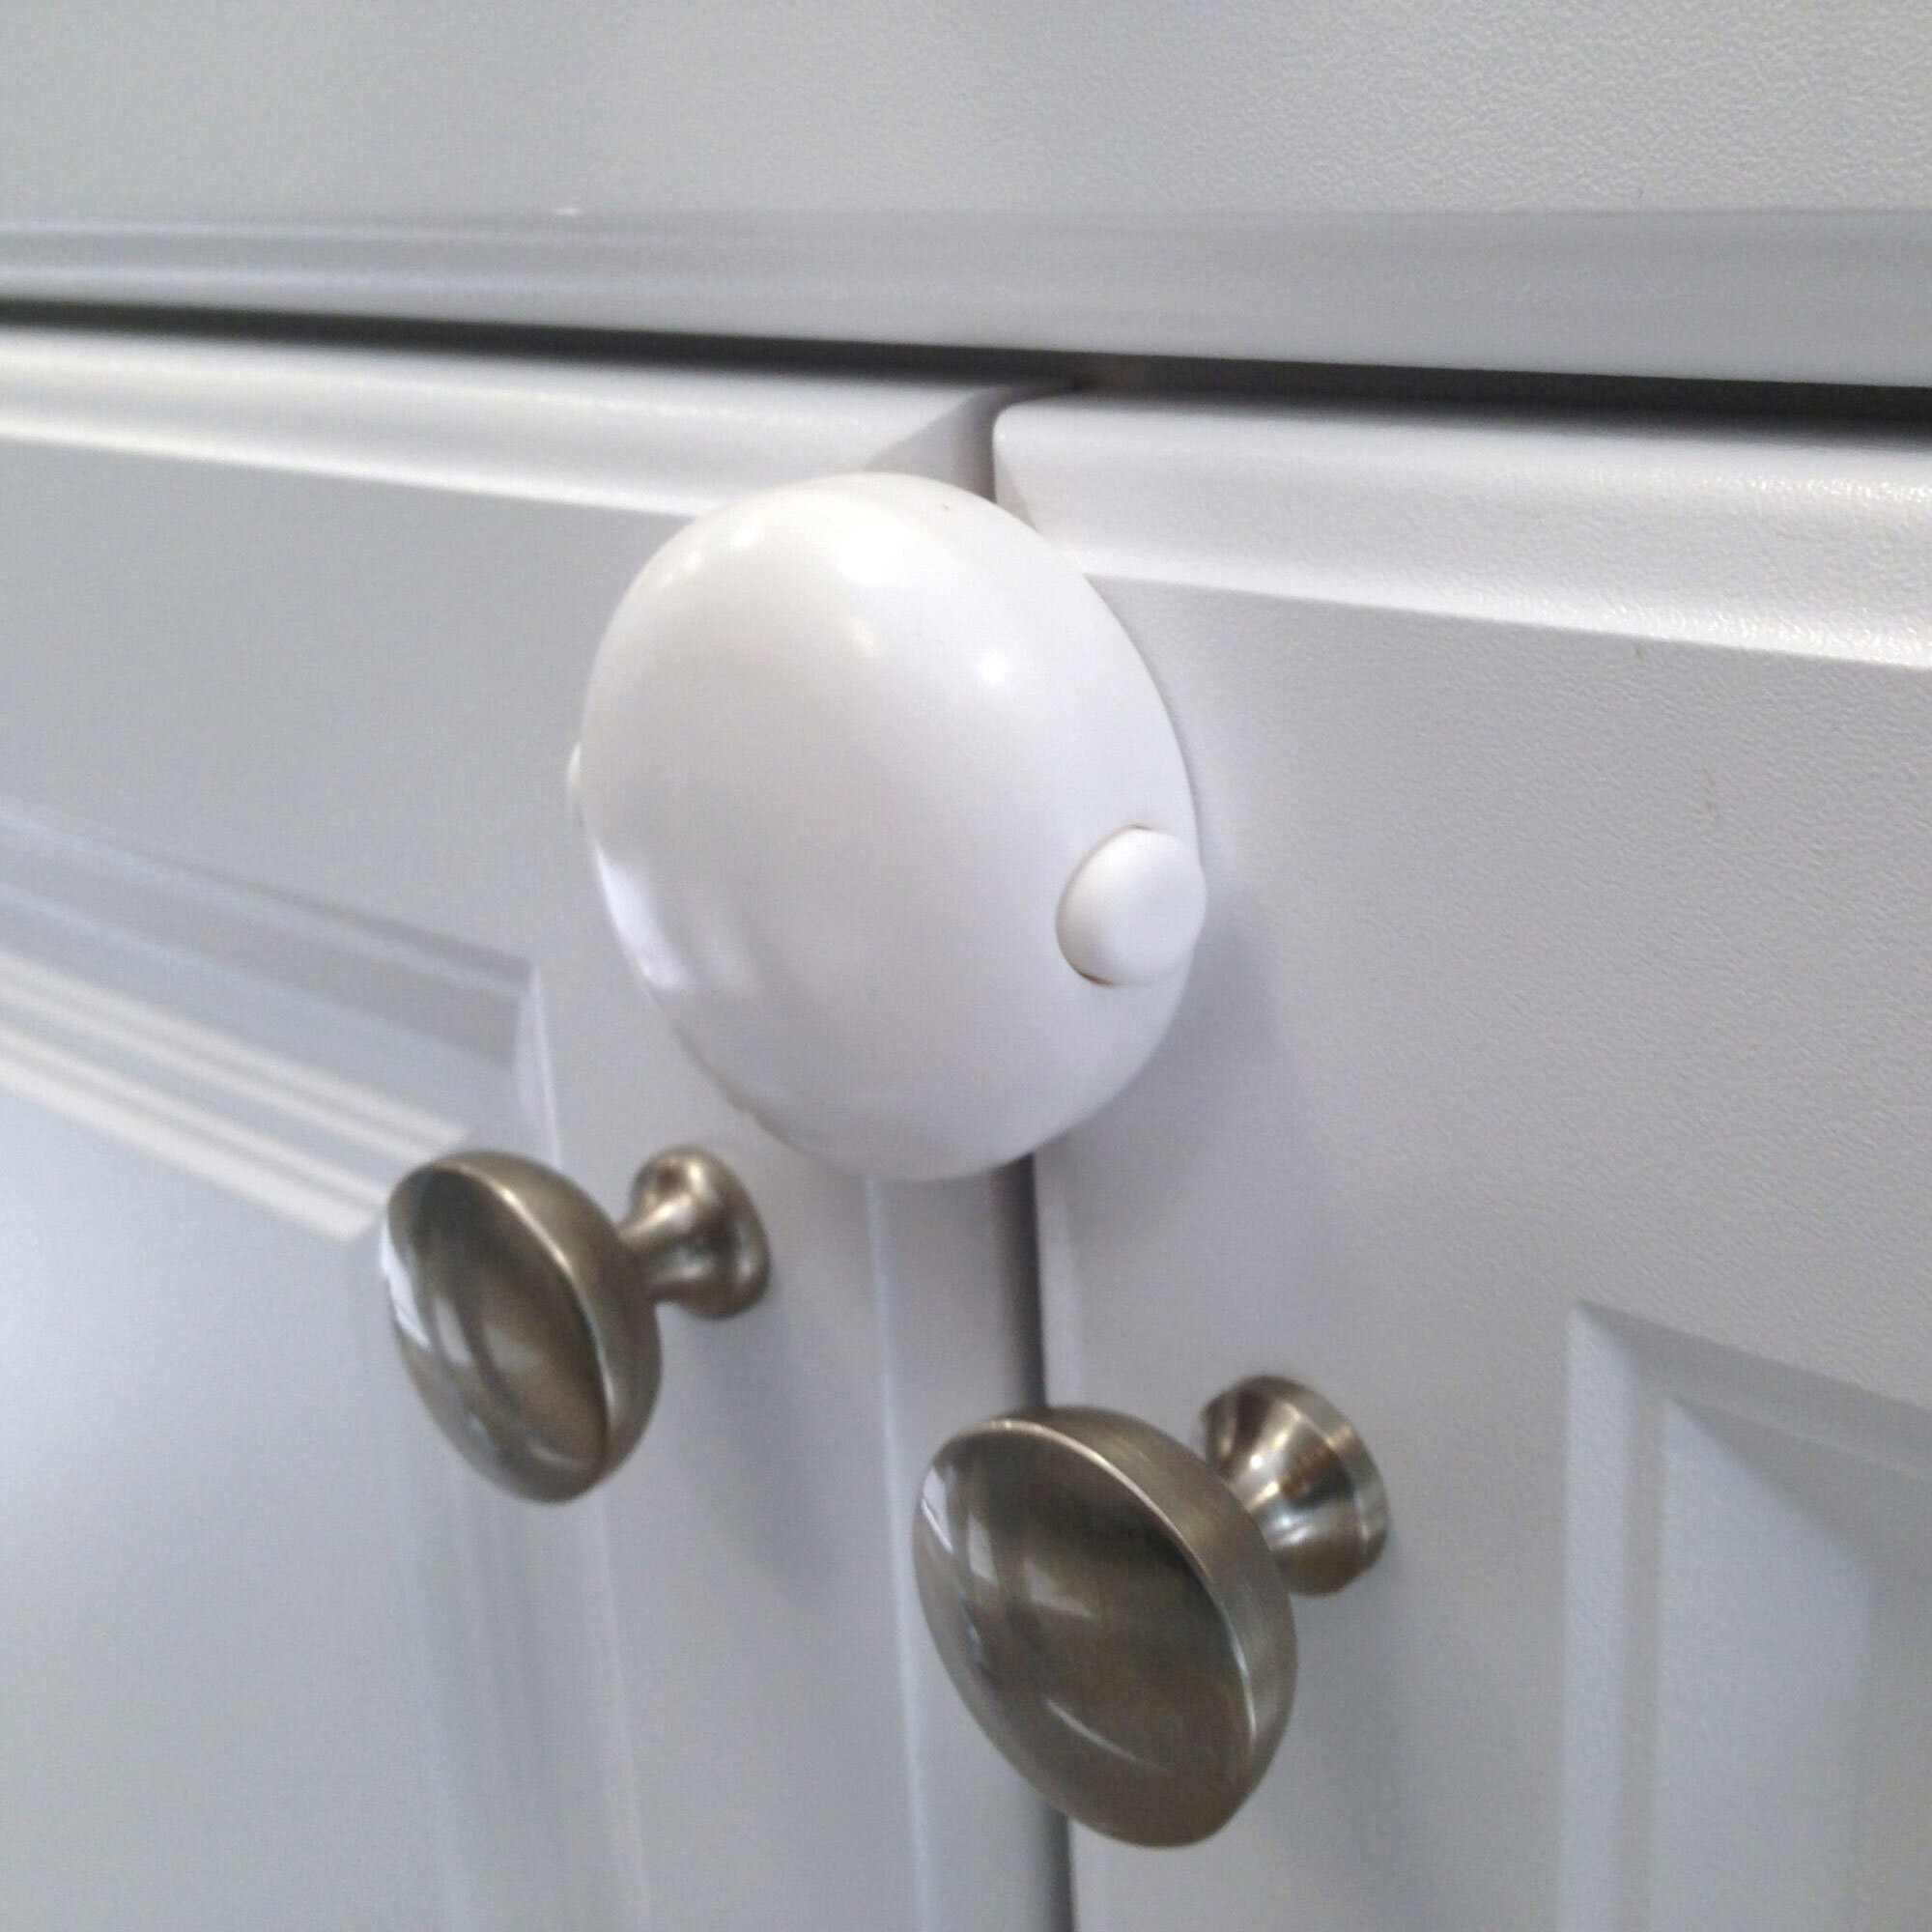 Adhesive Double Door Lock on white cabinet